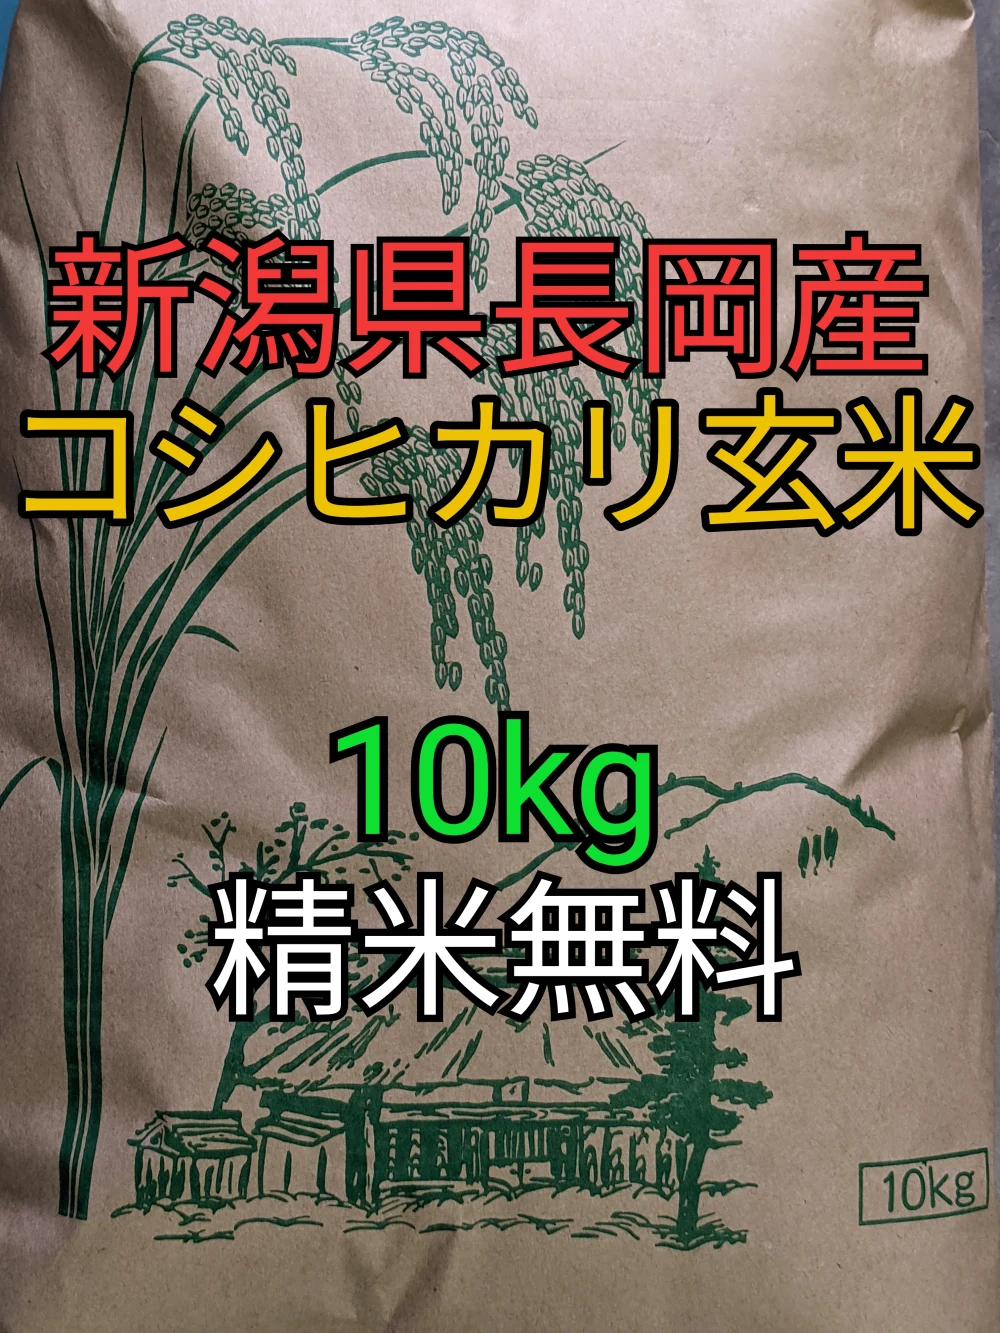 【新大特価SALE】令和4年度新米新潟県長岡産コシヒカリ10kg玄米【精米無料】